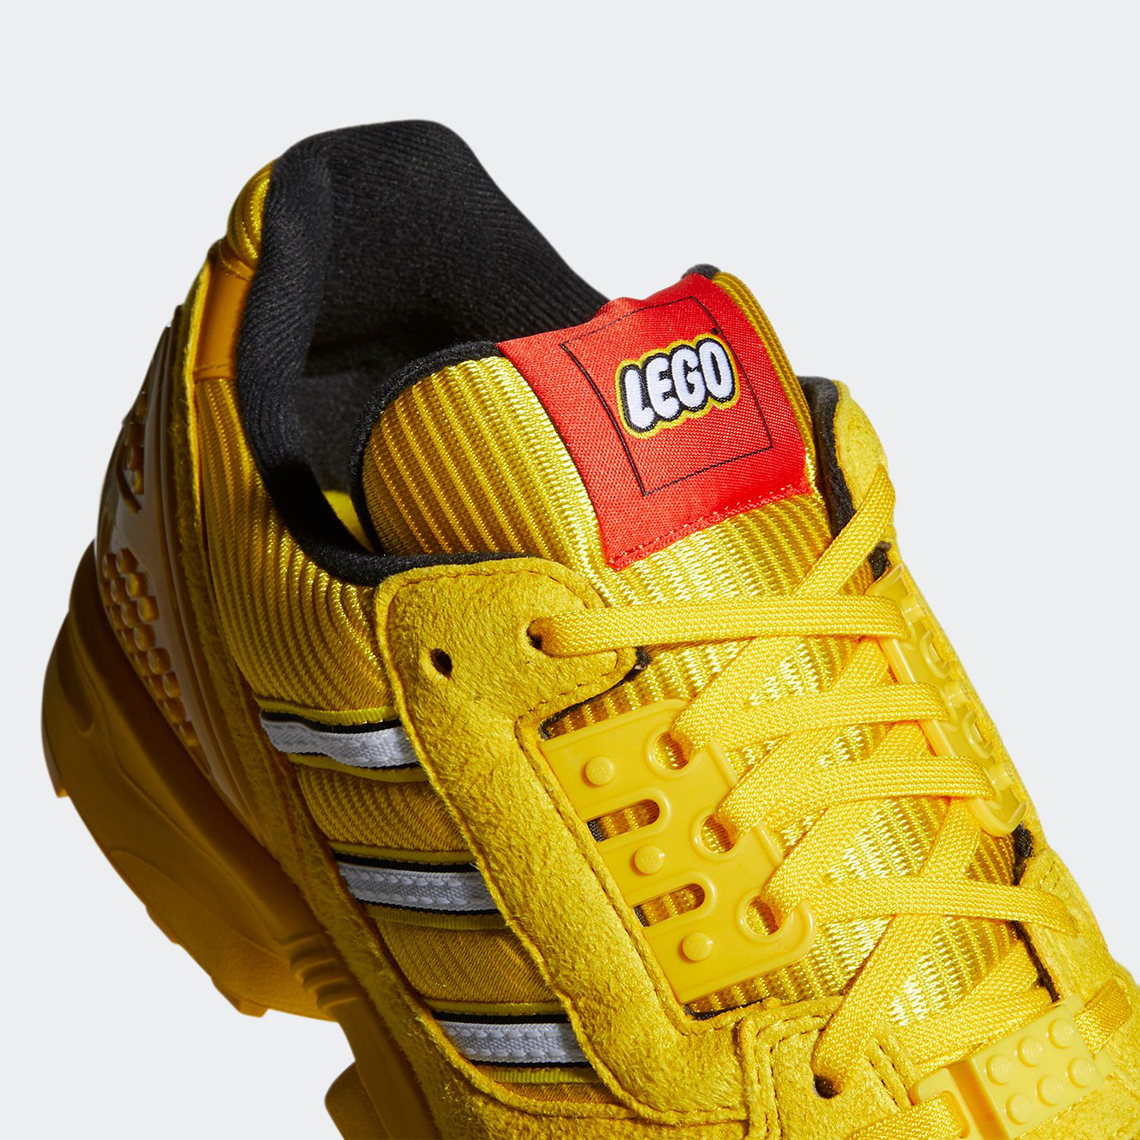 Adidas Zx8000 Lego Yellow Fy7081 4